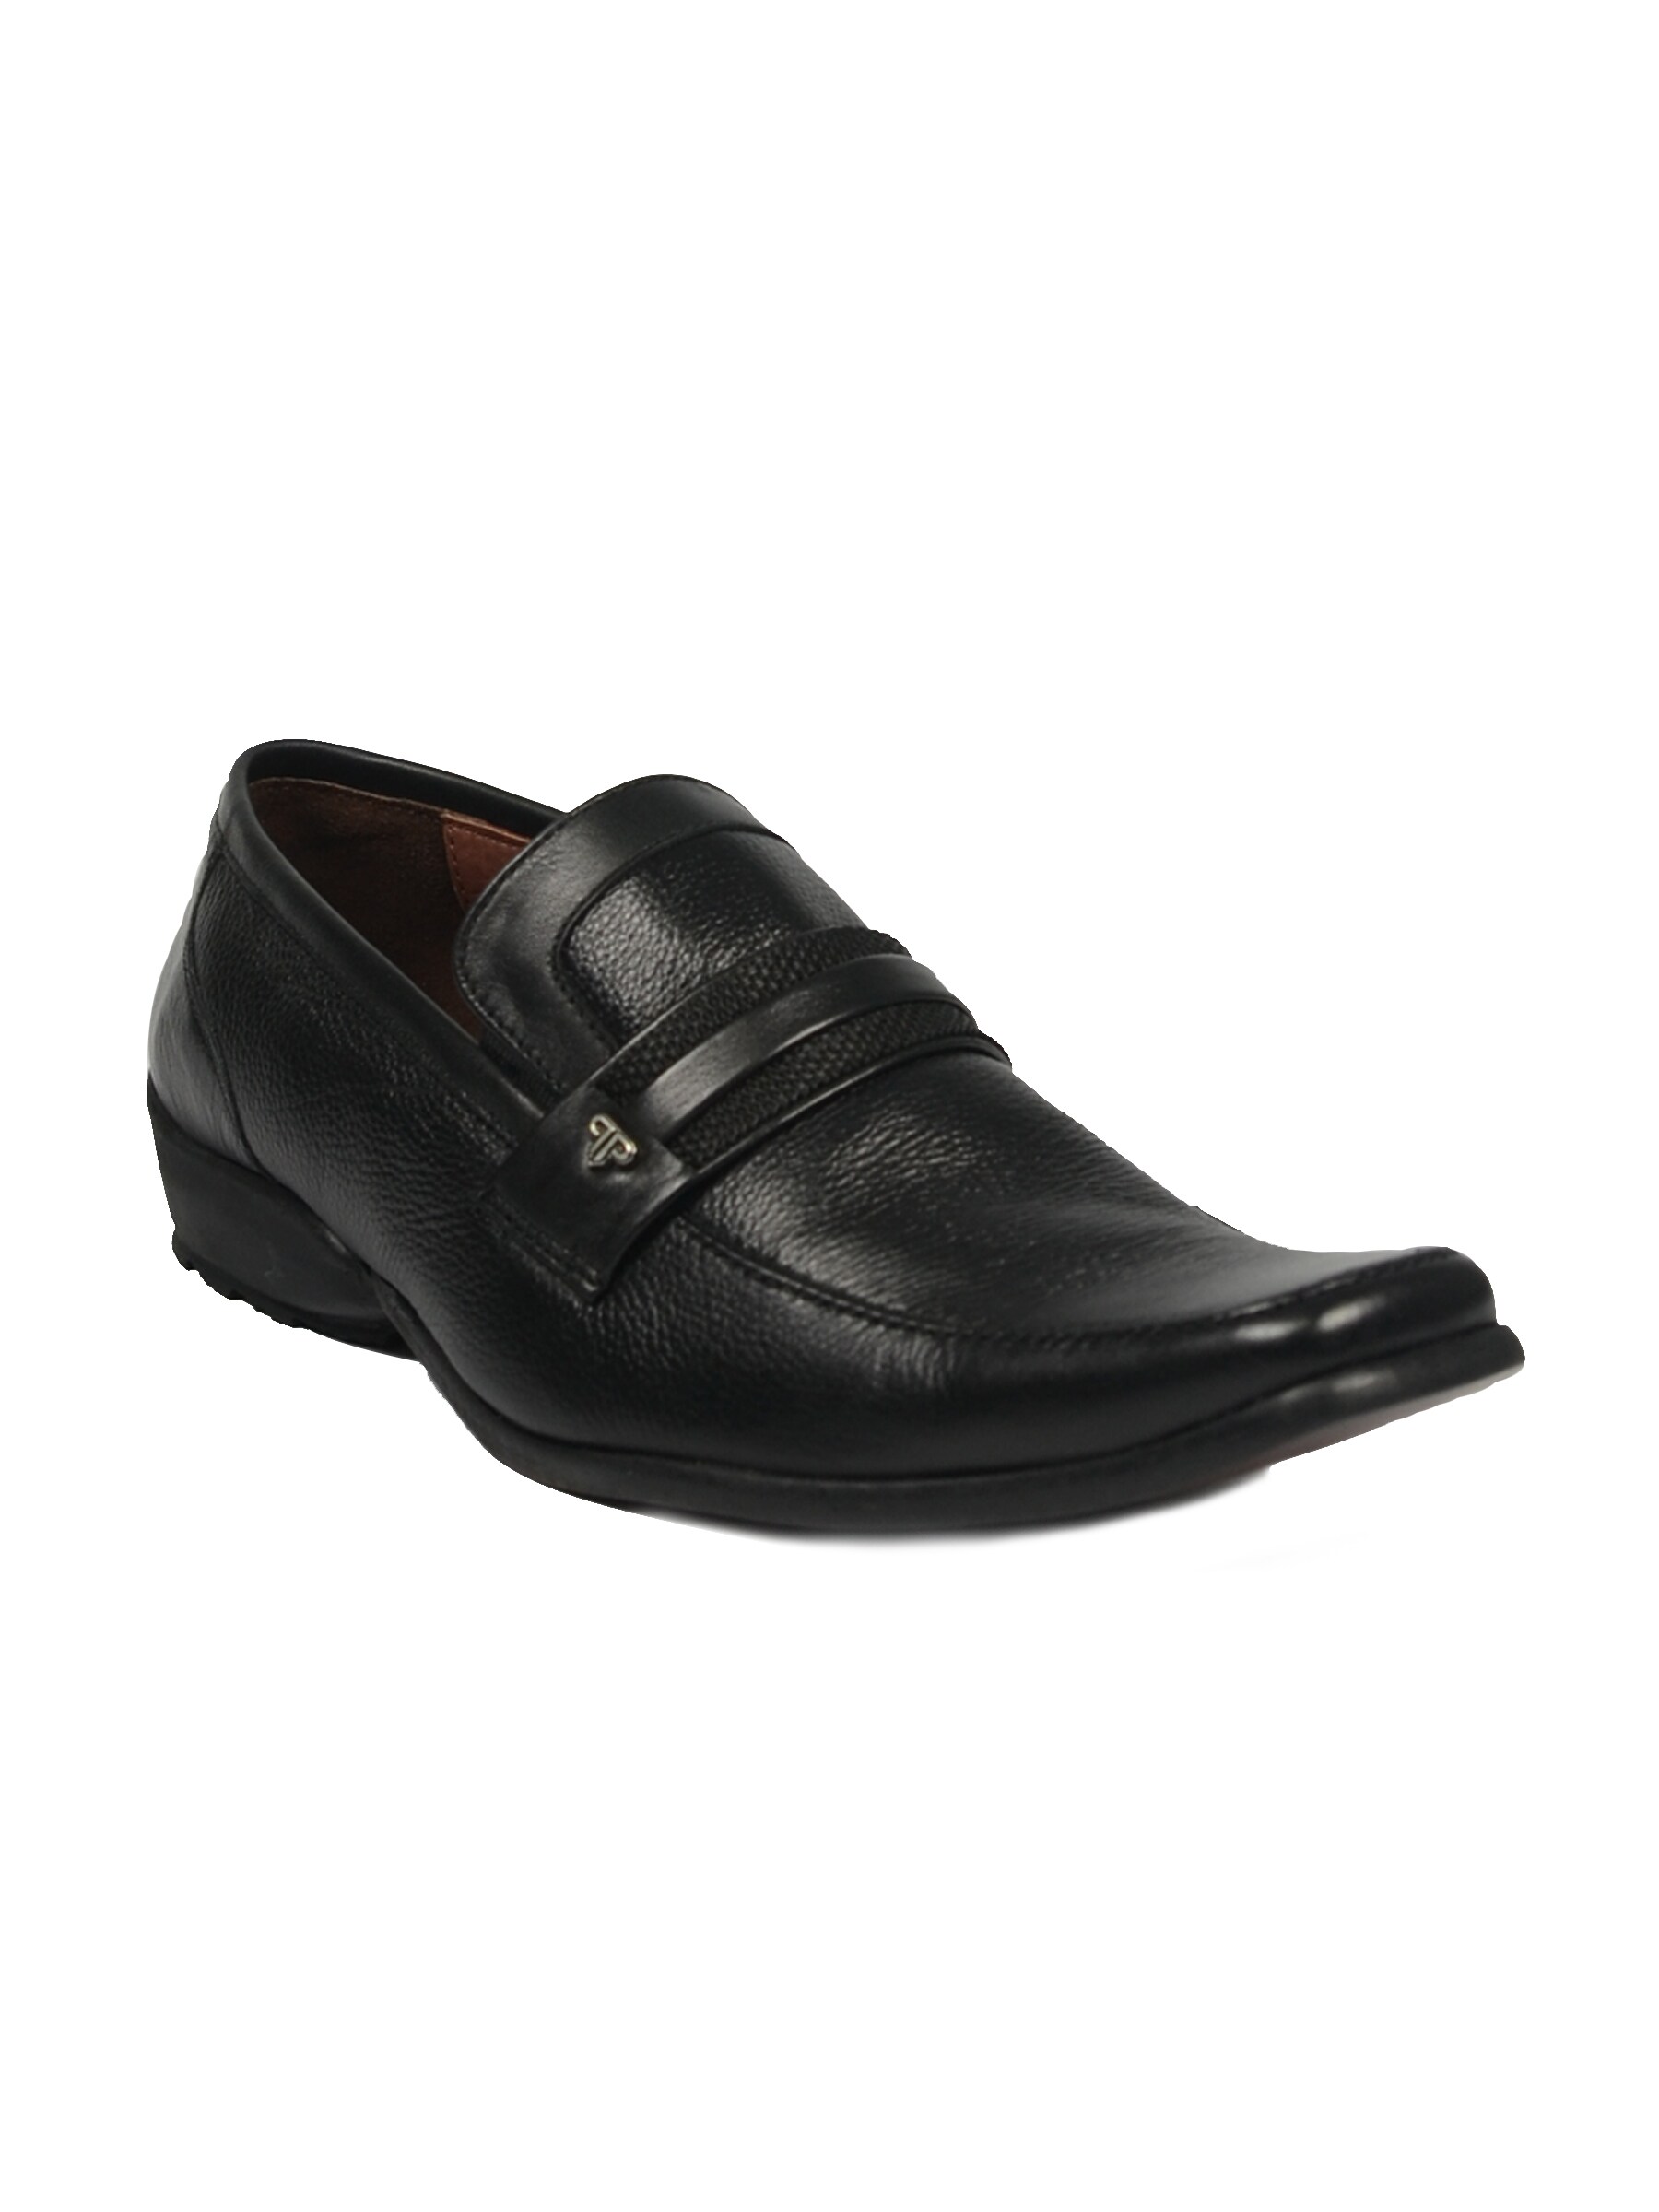 Provogue Men's Formal Black Shoe